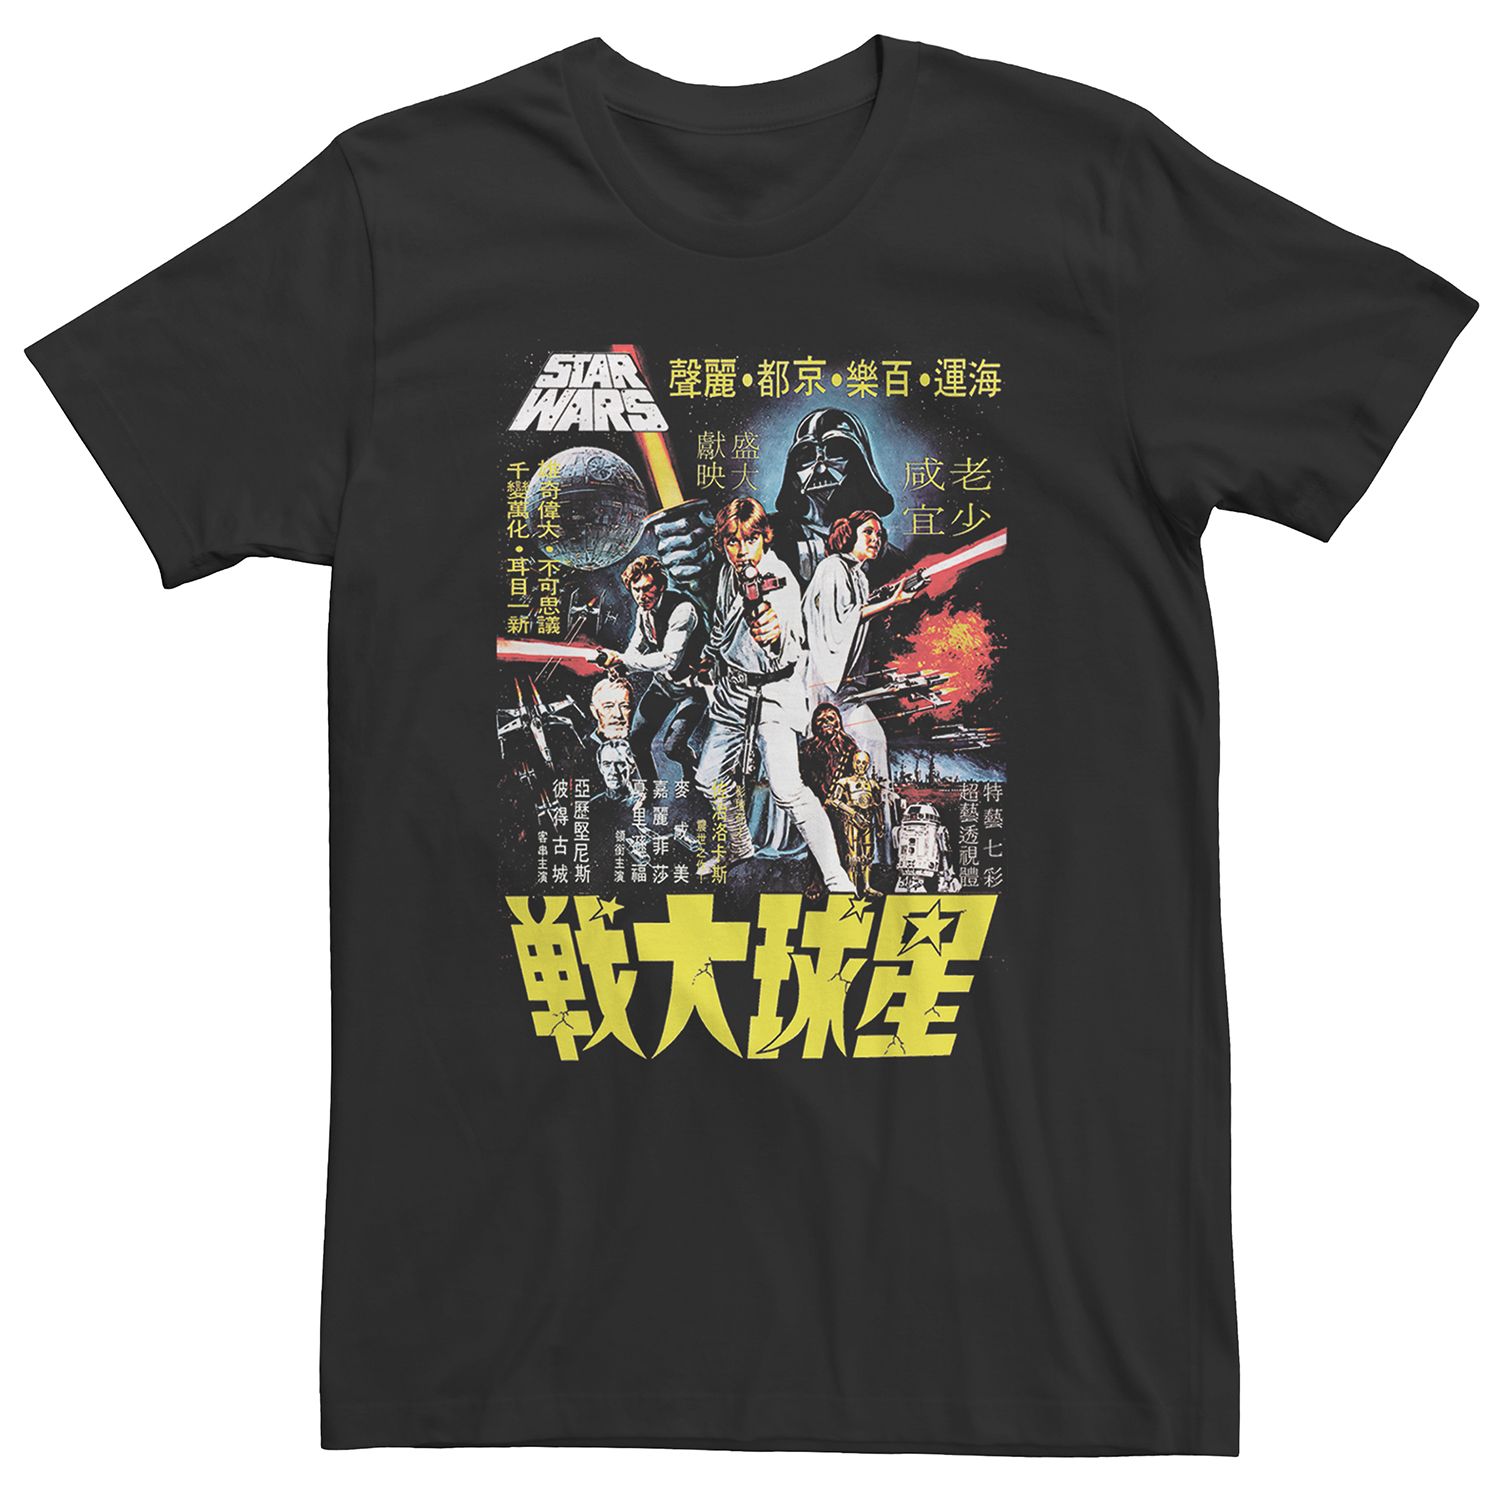 Мужская футболка с плакатом «Звездные войны» Licensed Character, черный